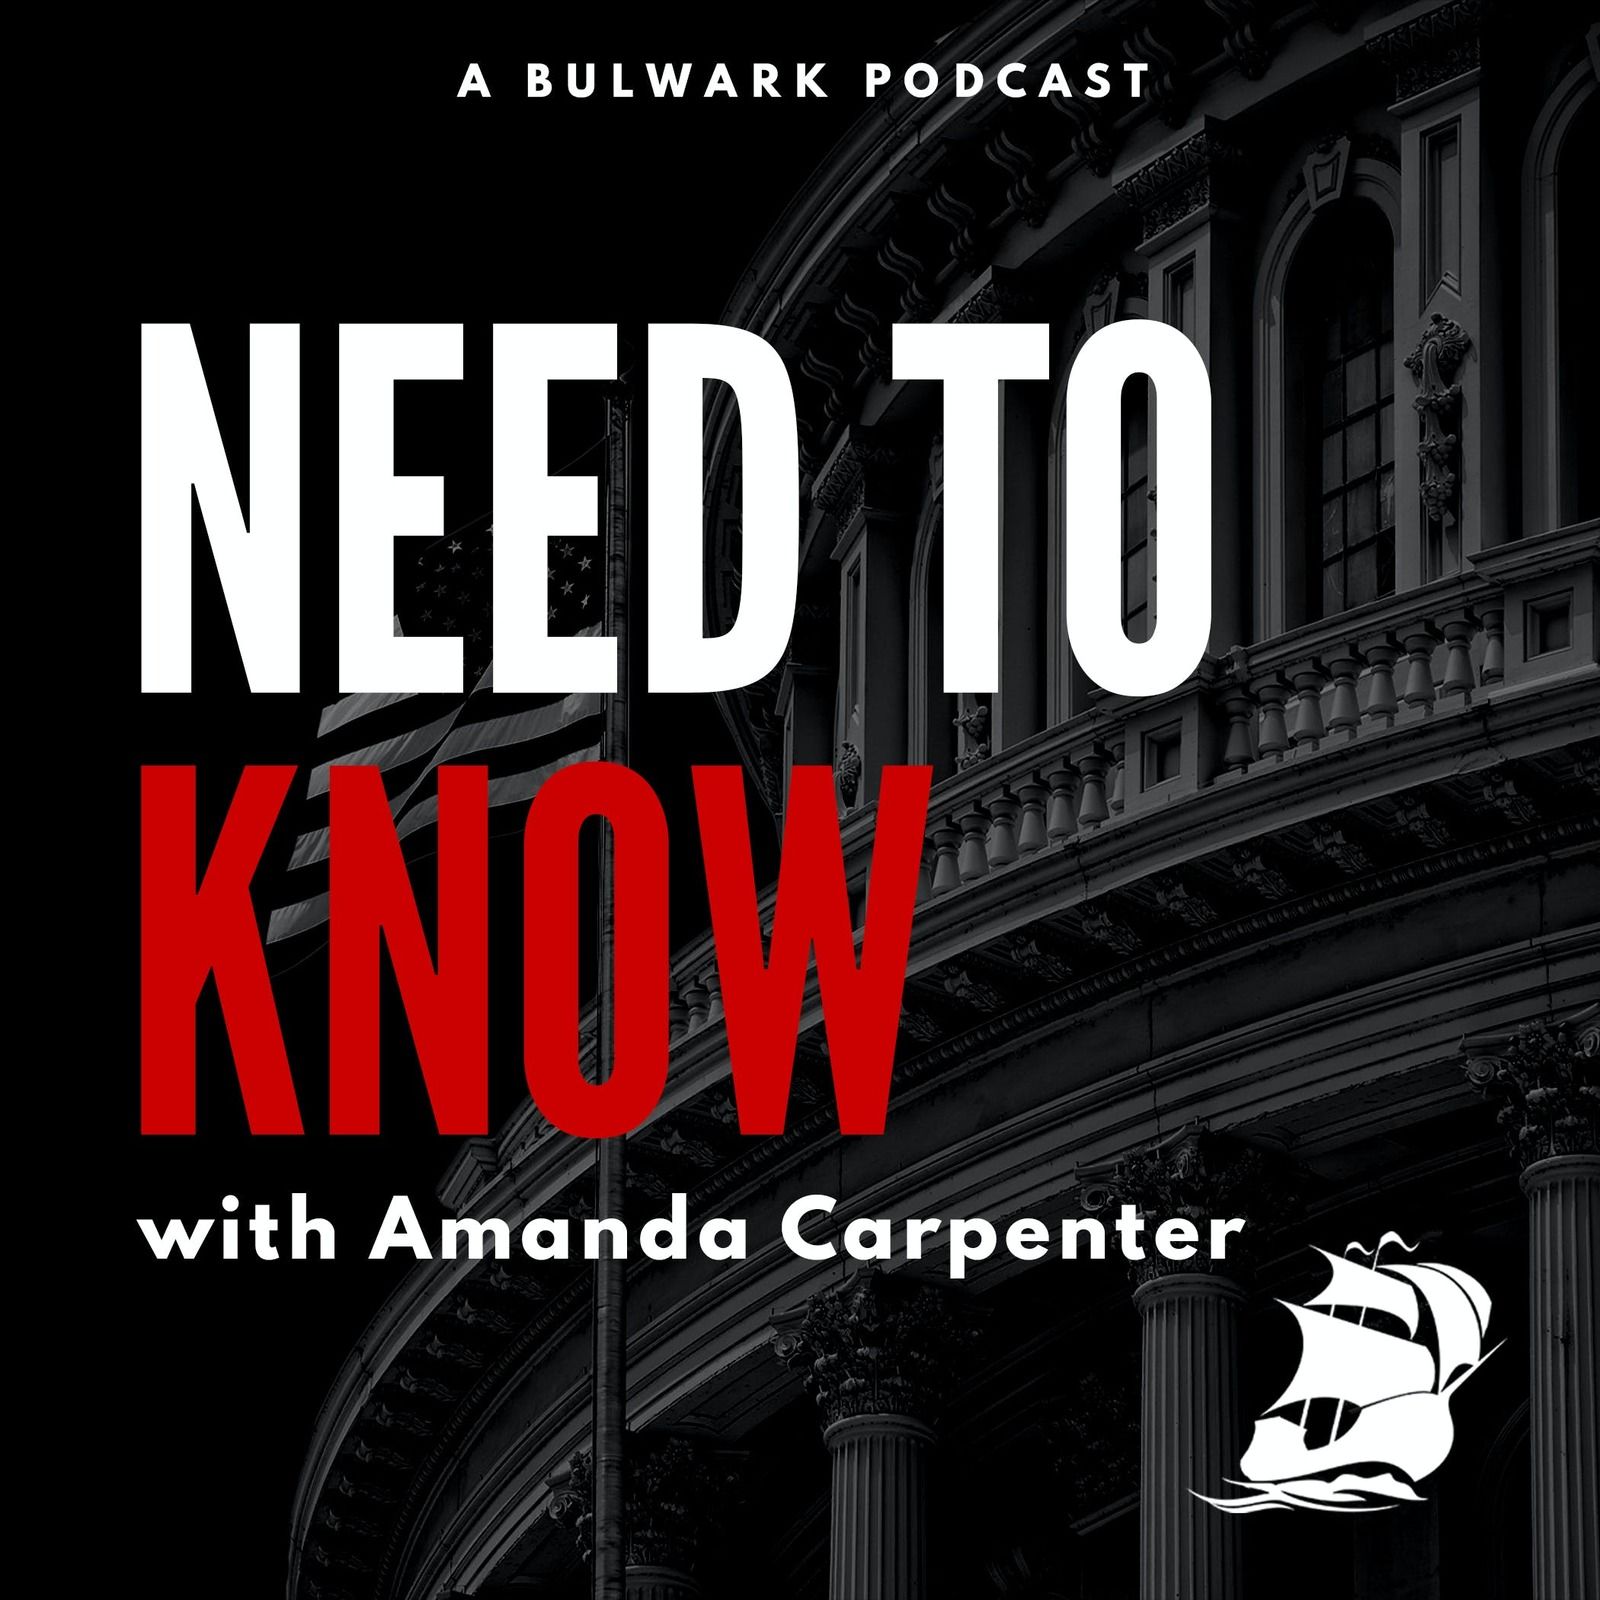 Amanda Carpenter: Need to Know